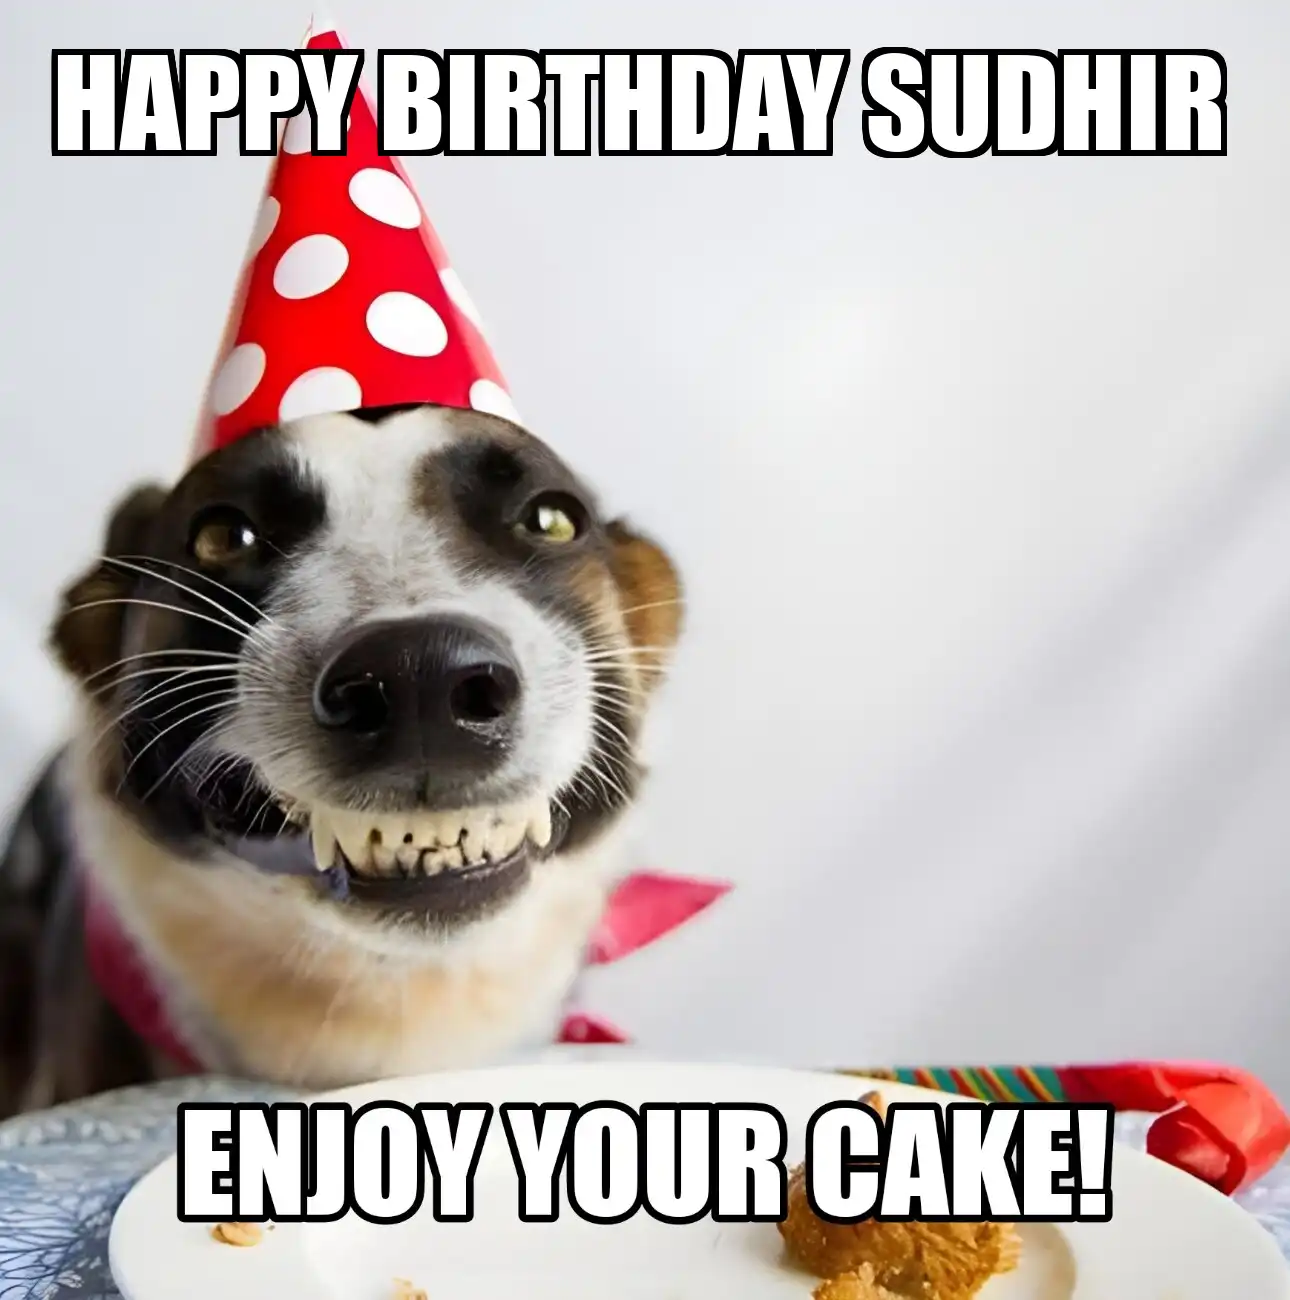 Happy Birthday Sudhir Enjoy Your Cake Dog Meme